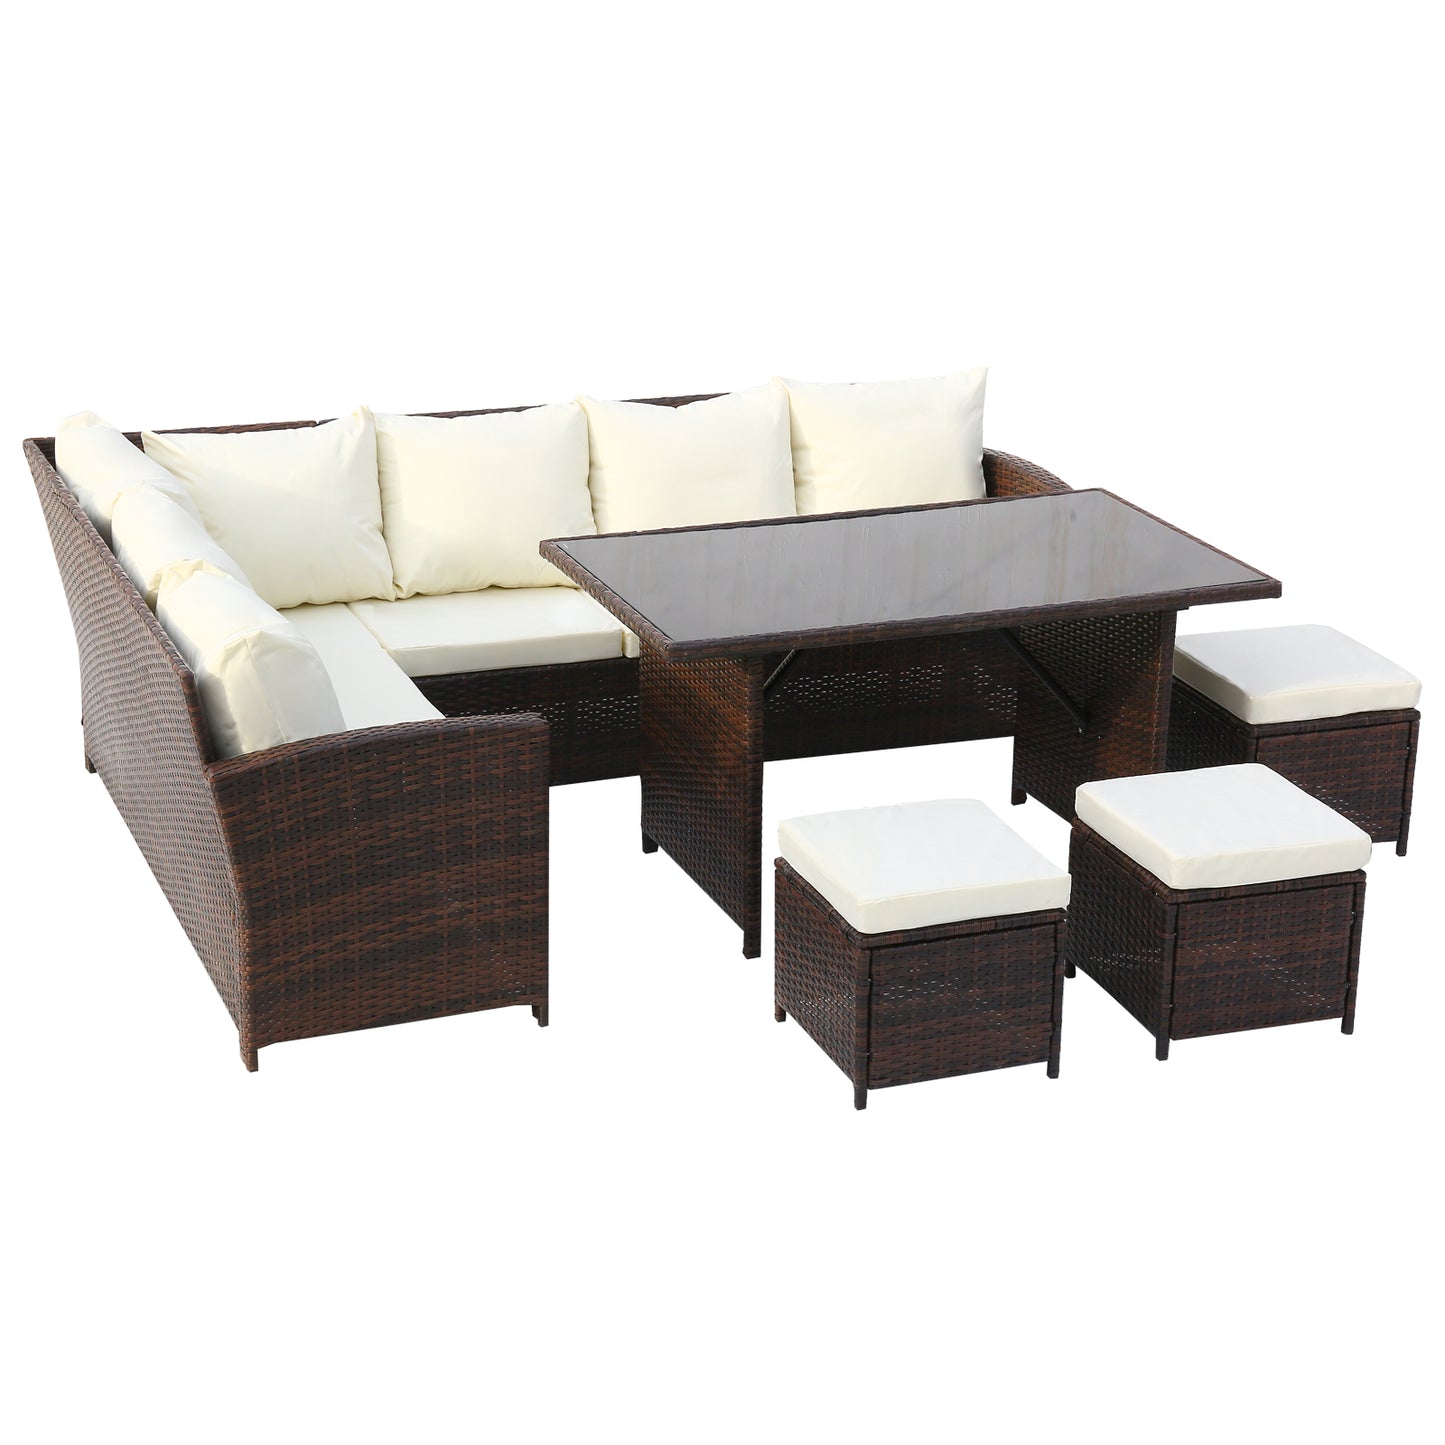 9 Seater Rattan Corner Dining Set - White Cushions - Brown